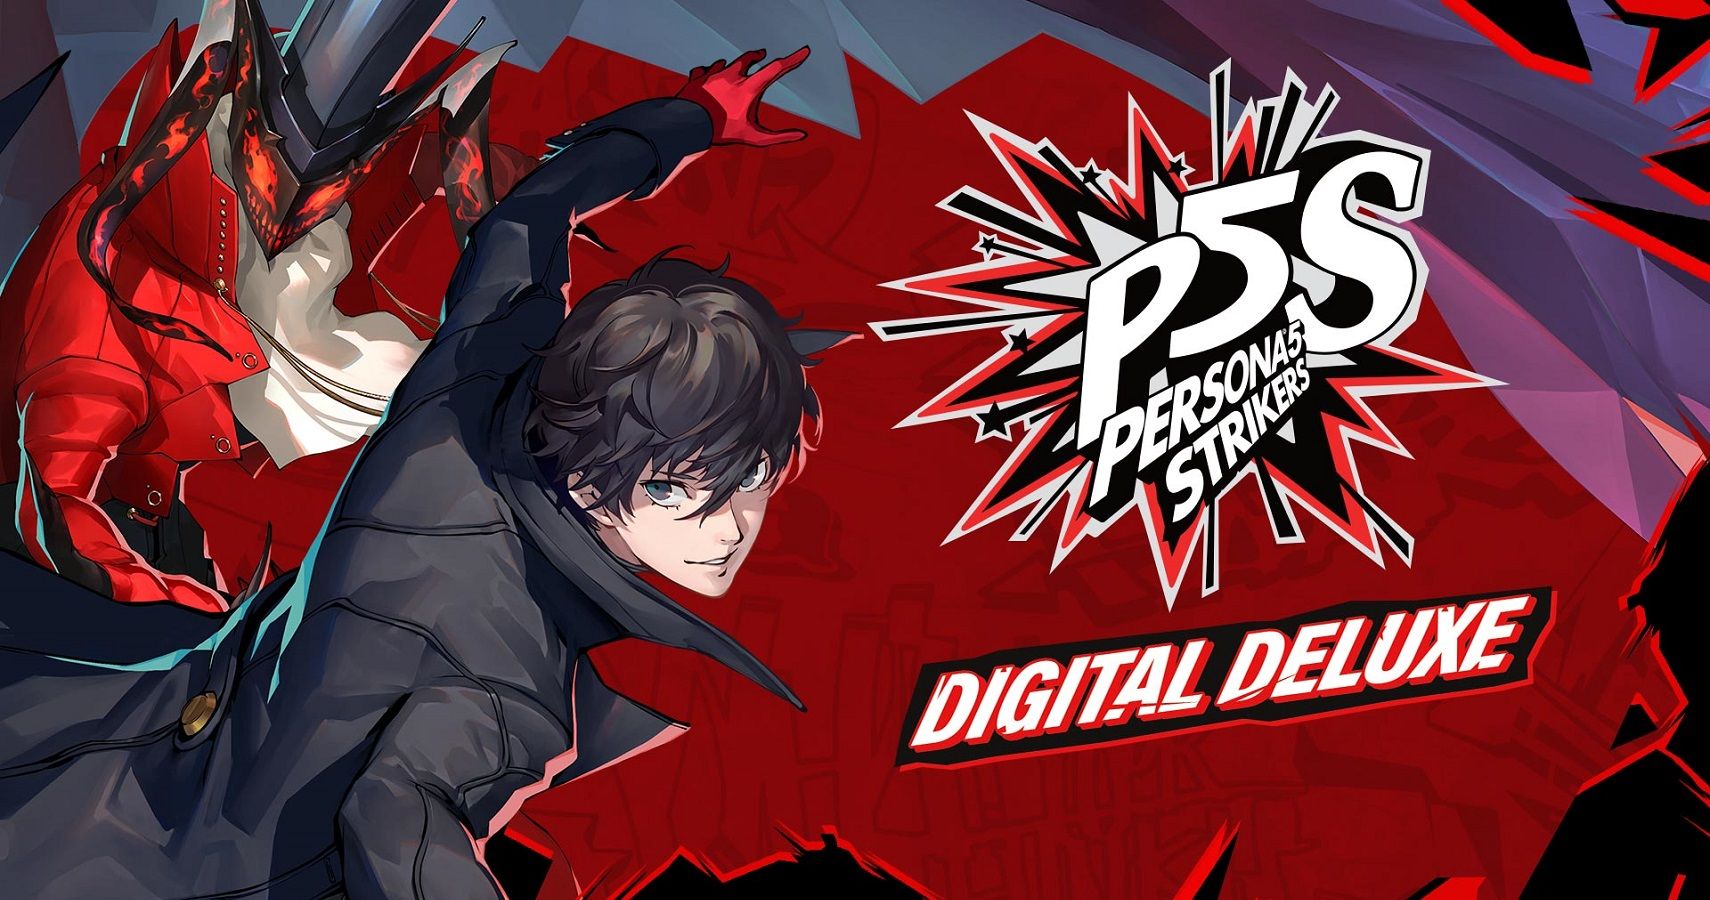 Persona 5 Strikers Digital Deluxe